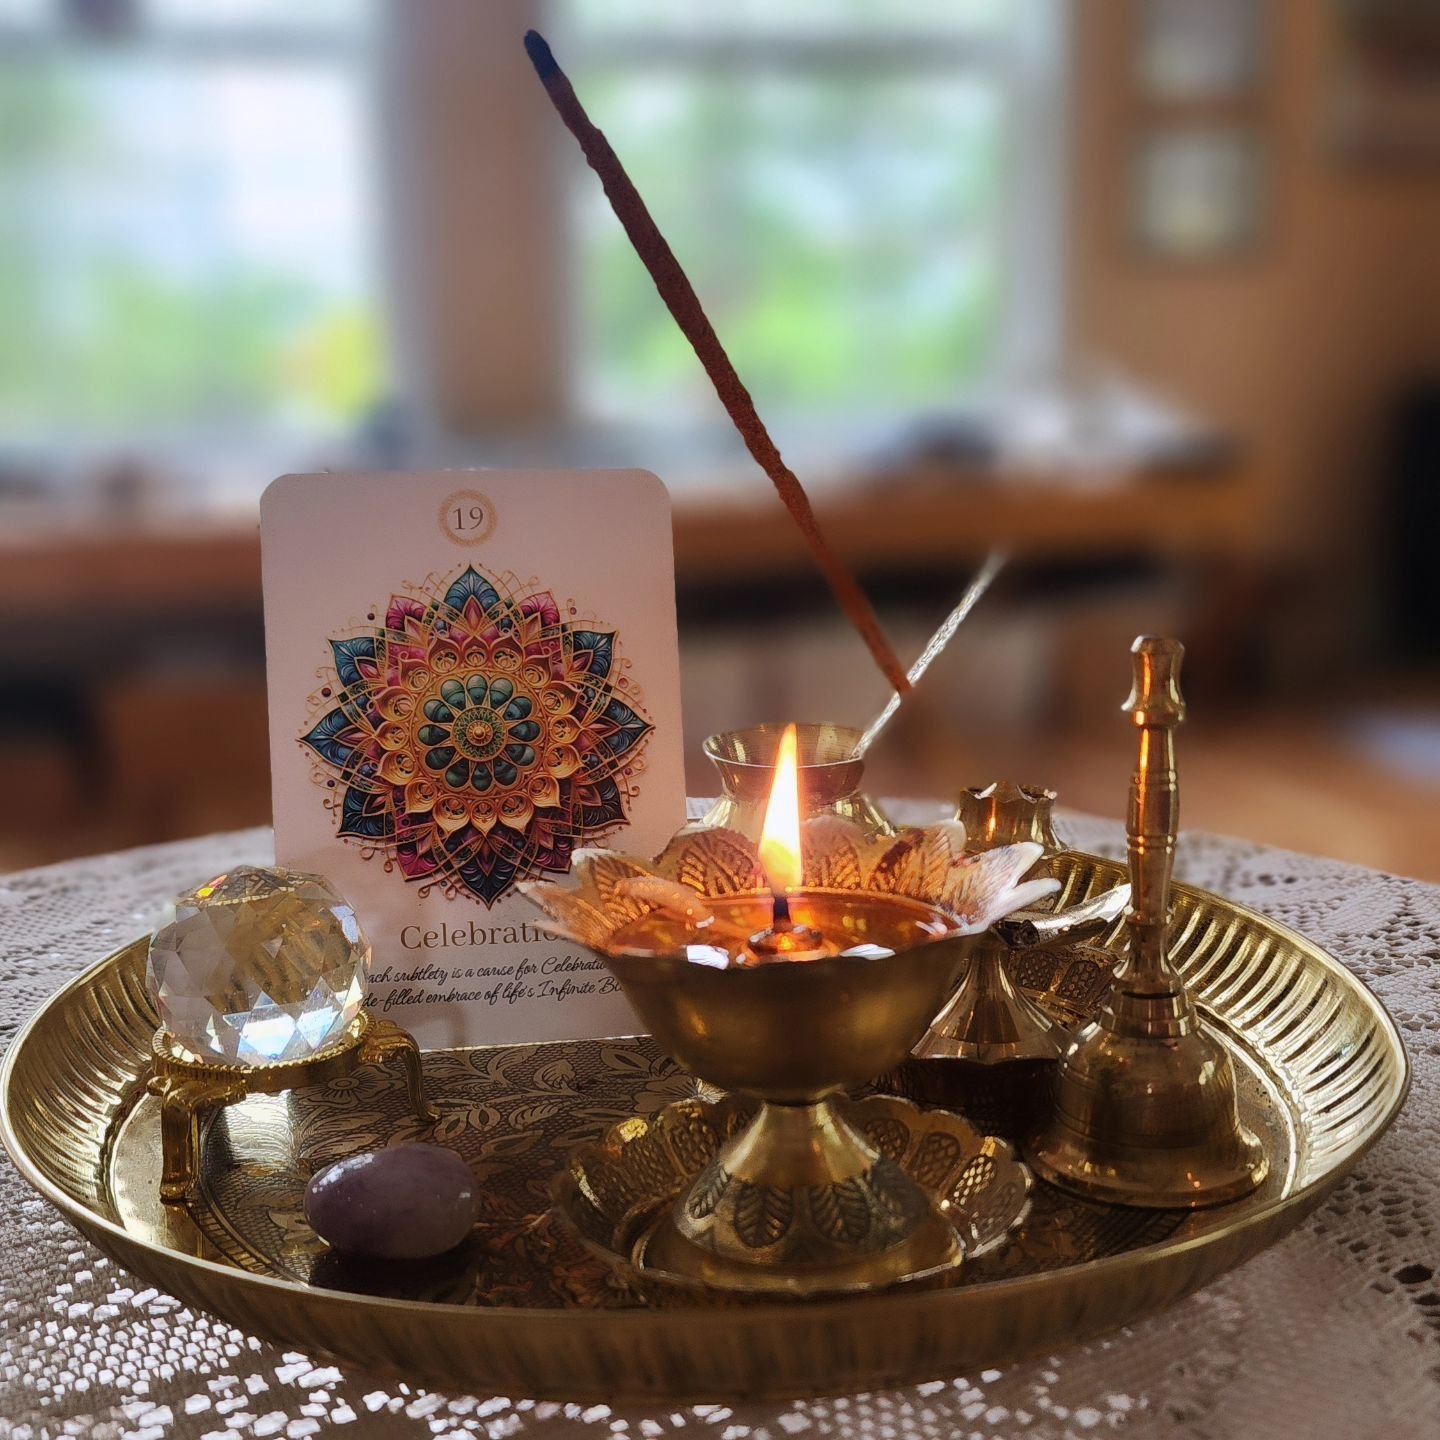 Happy Akshaya Tritiya! 

May you be blessed always and in all ways!

Namaste! 🌟🌟🌟